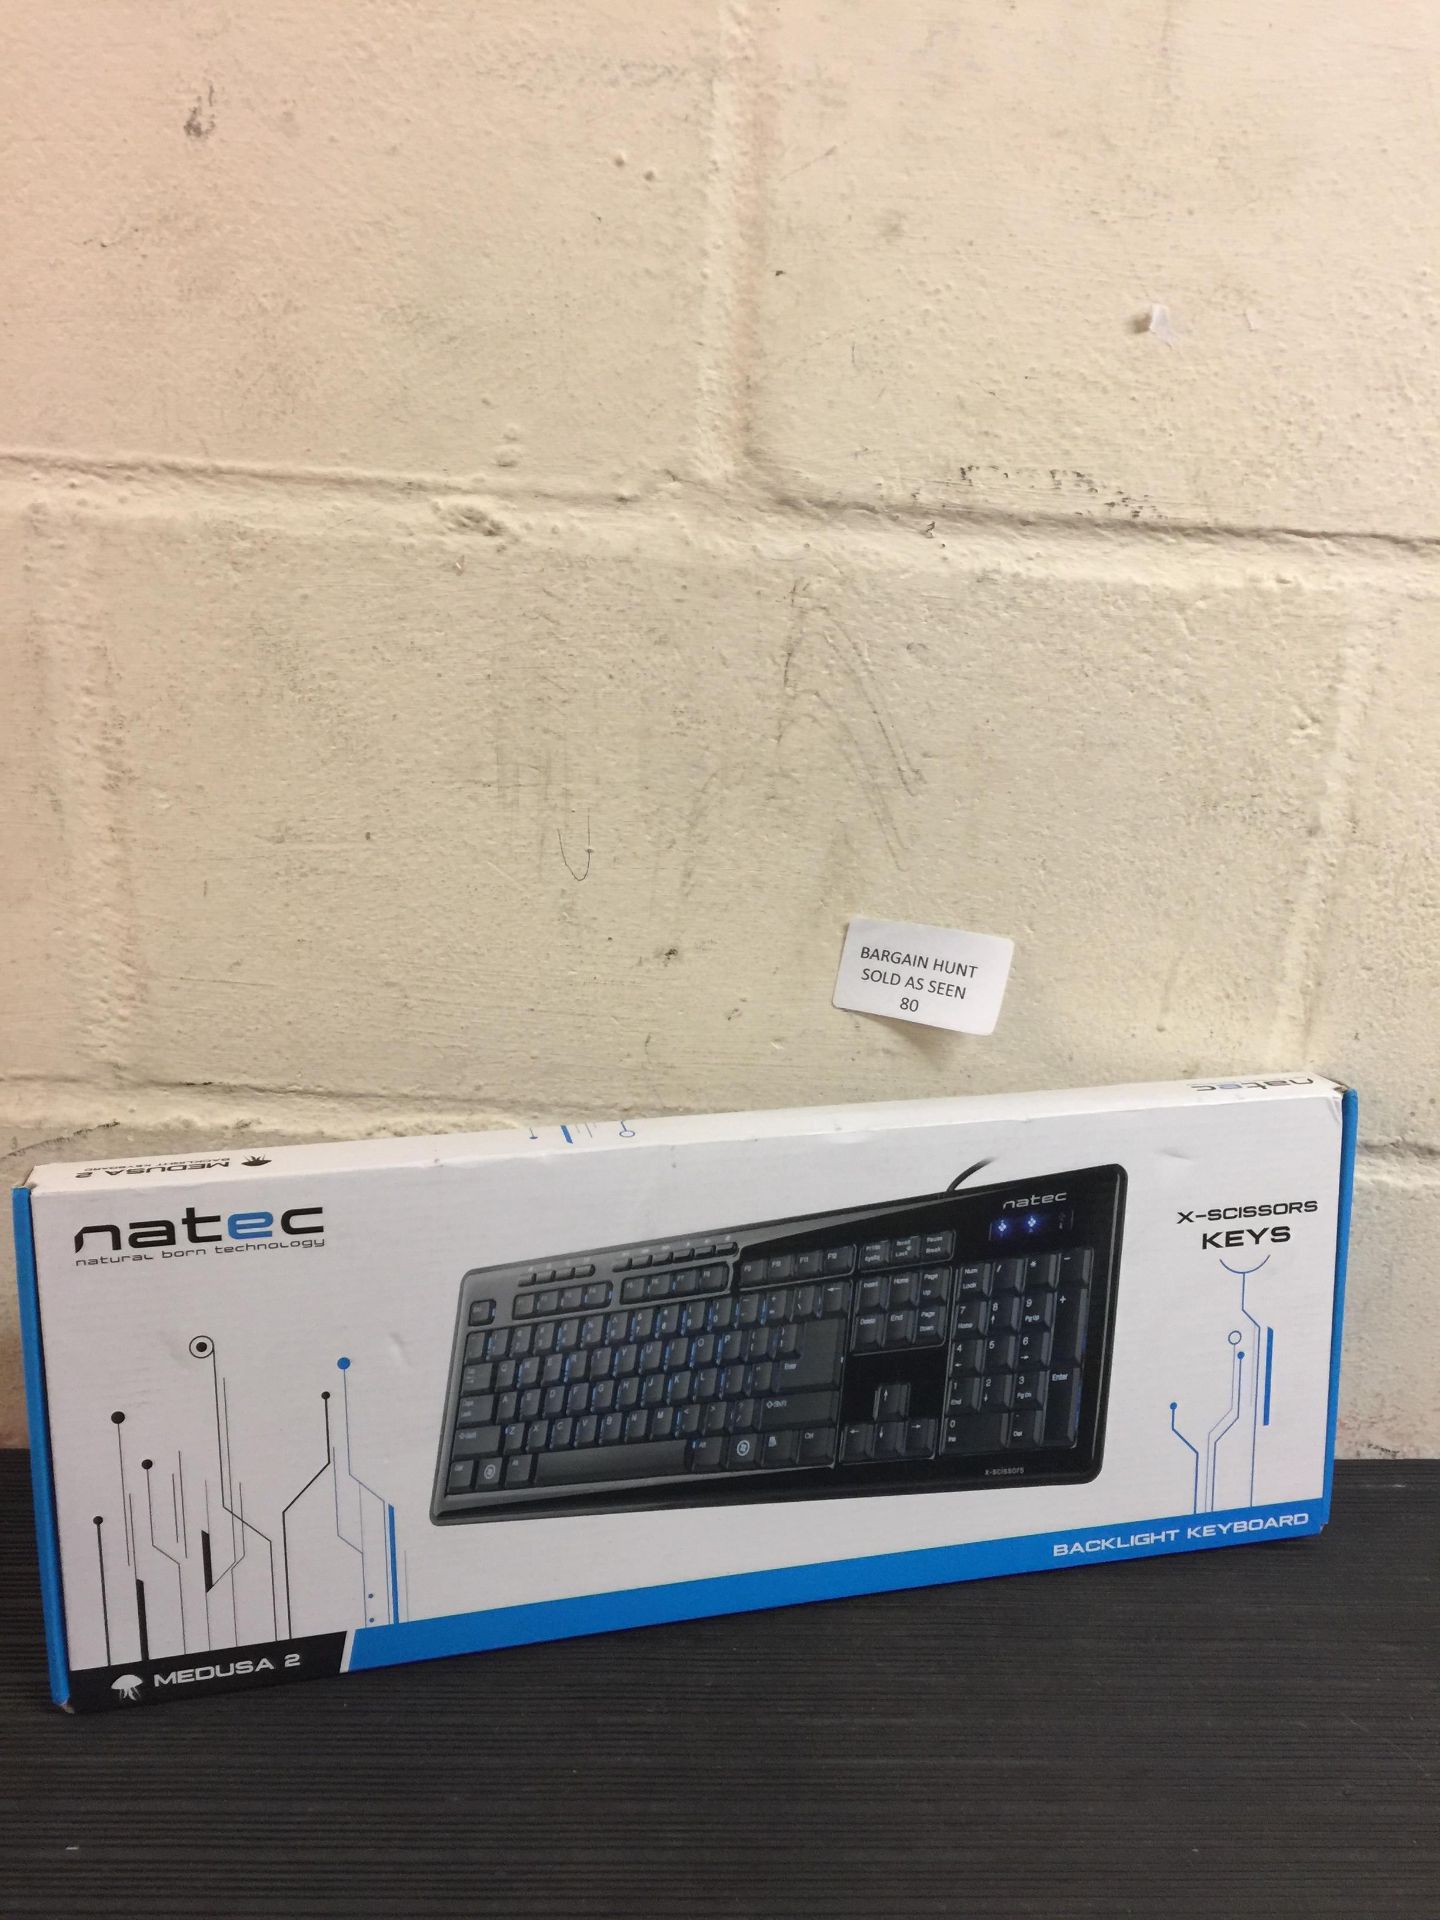 Natec Back-Light Keyboard